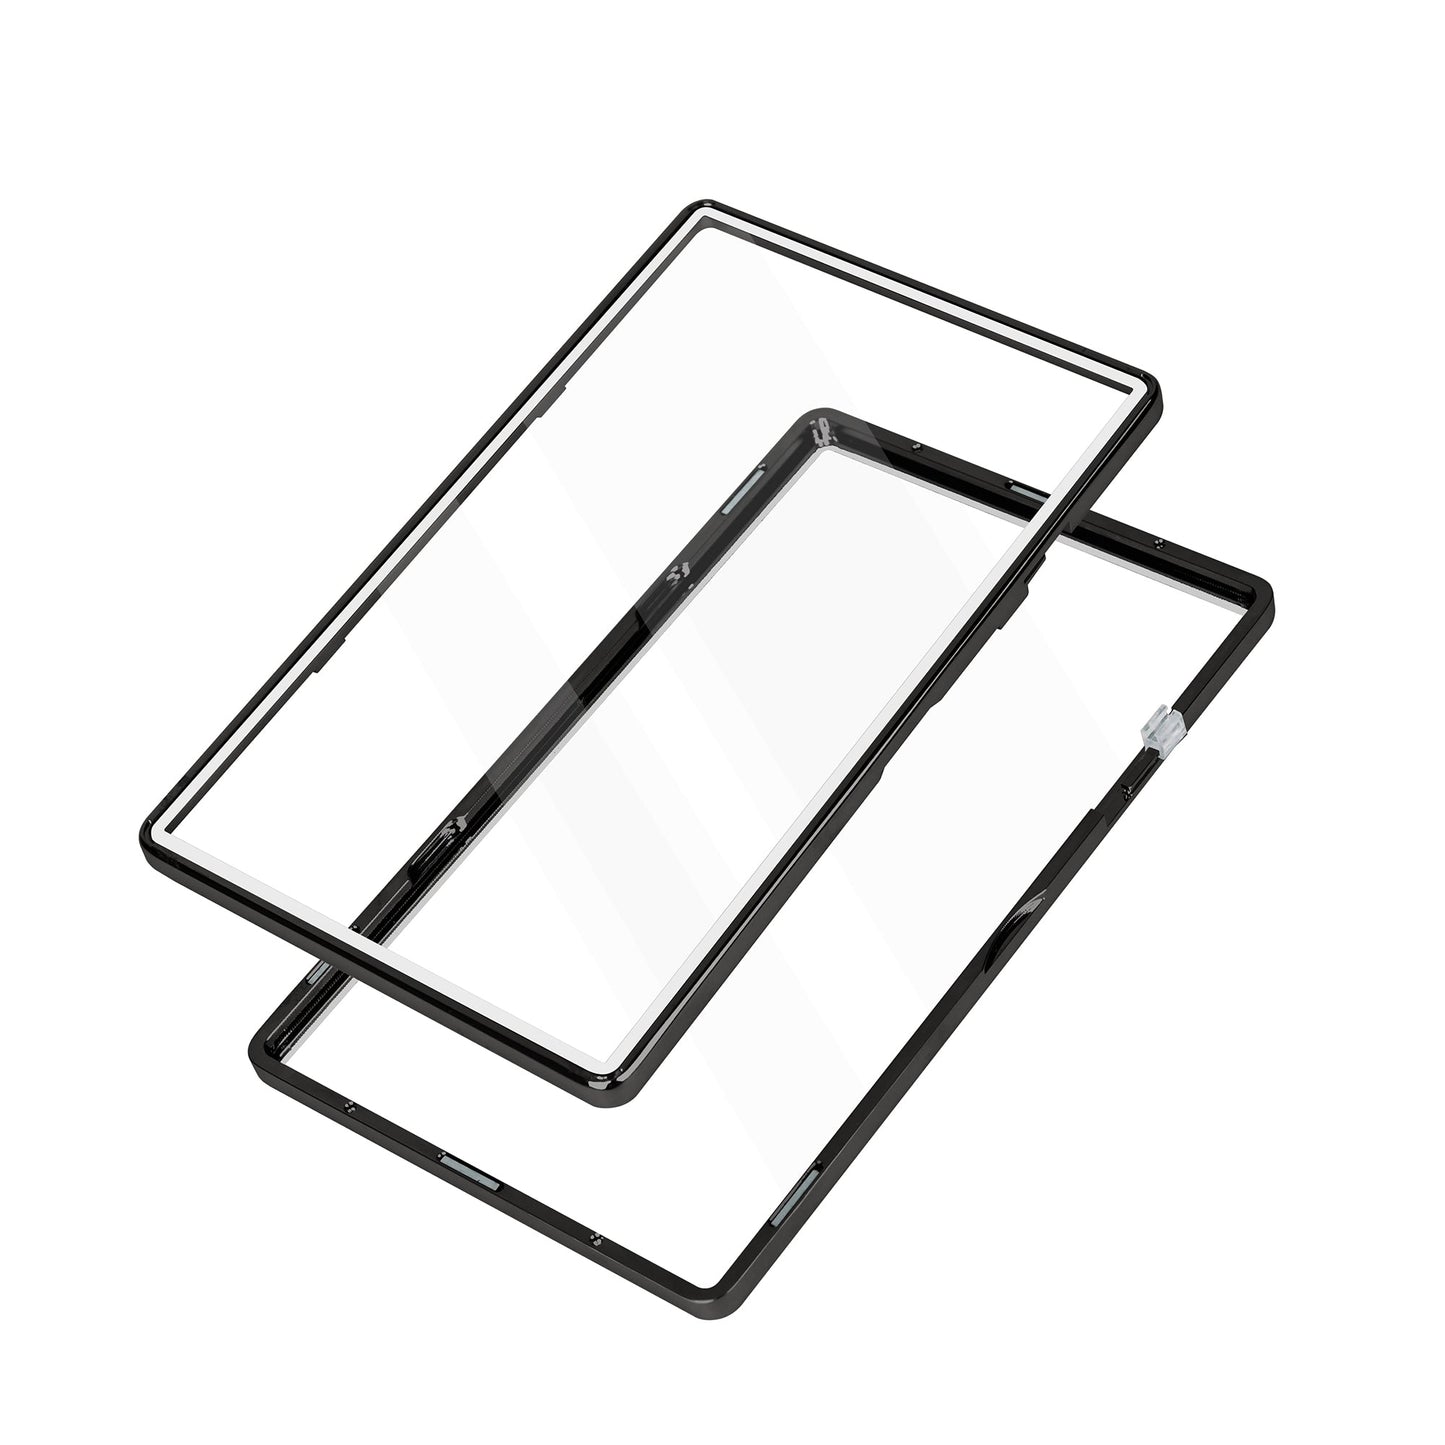 Standard PSA Slabmags Metallic Black With White Color Glass Border